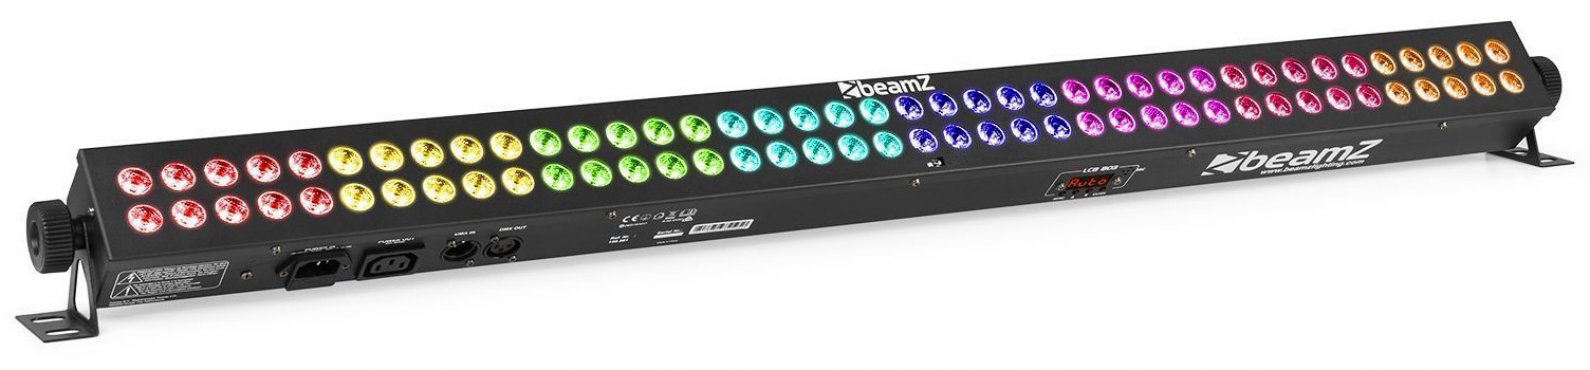 BeamZ LCB803 LED Bar 80X 3-IN-1 DMX IRC